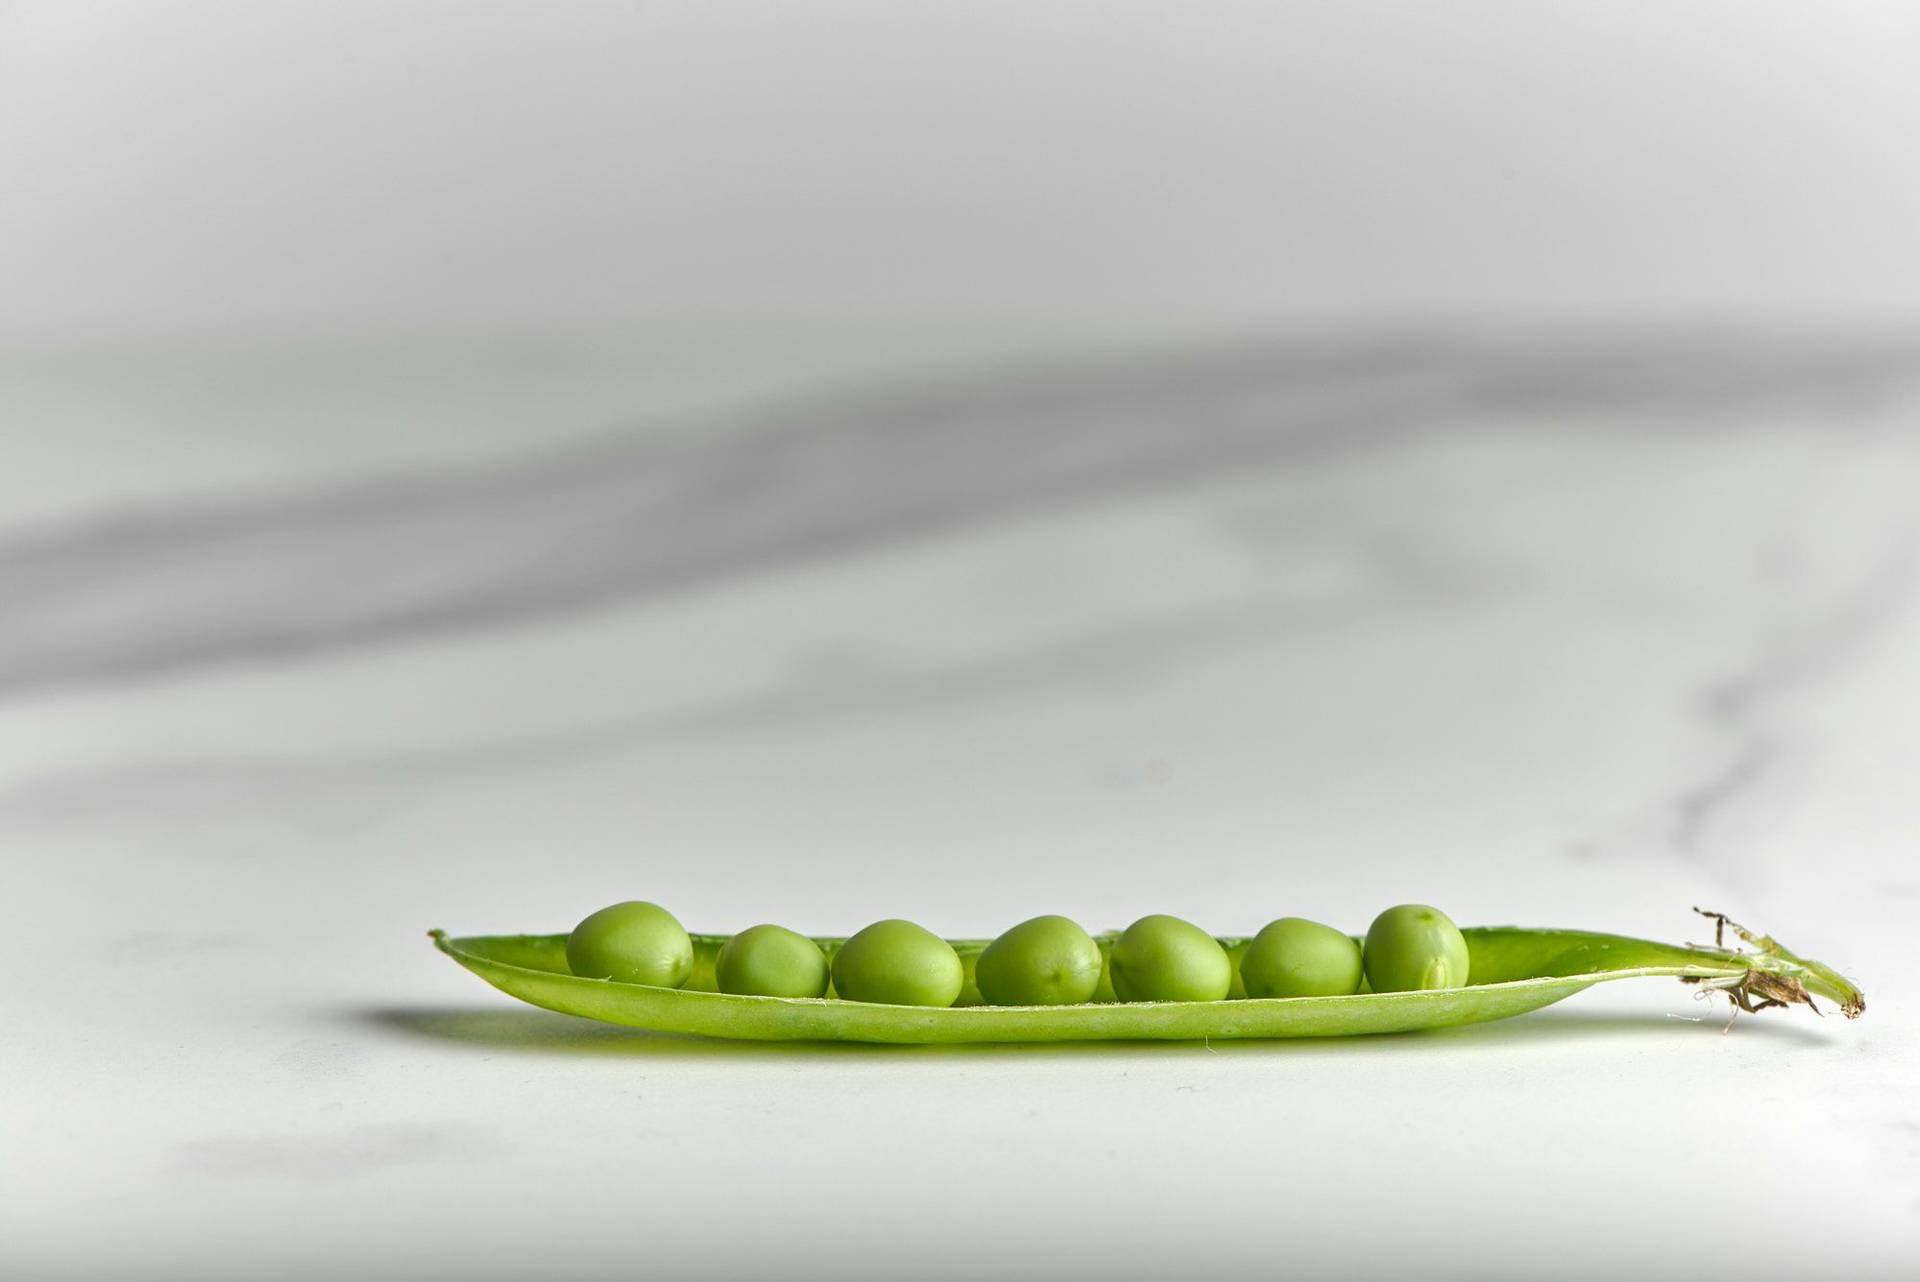 sugar snap peas with marbled sapienstone top